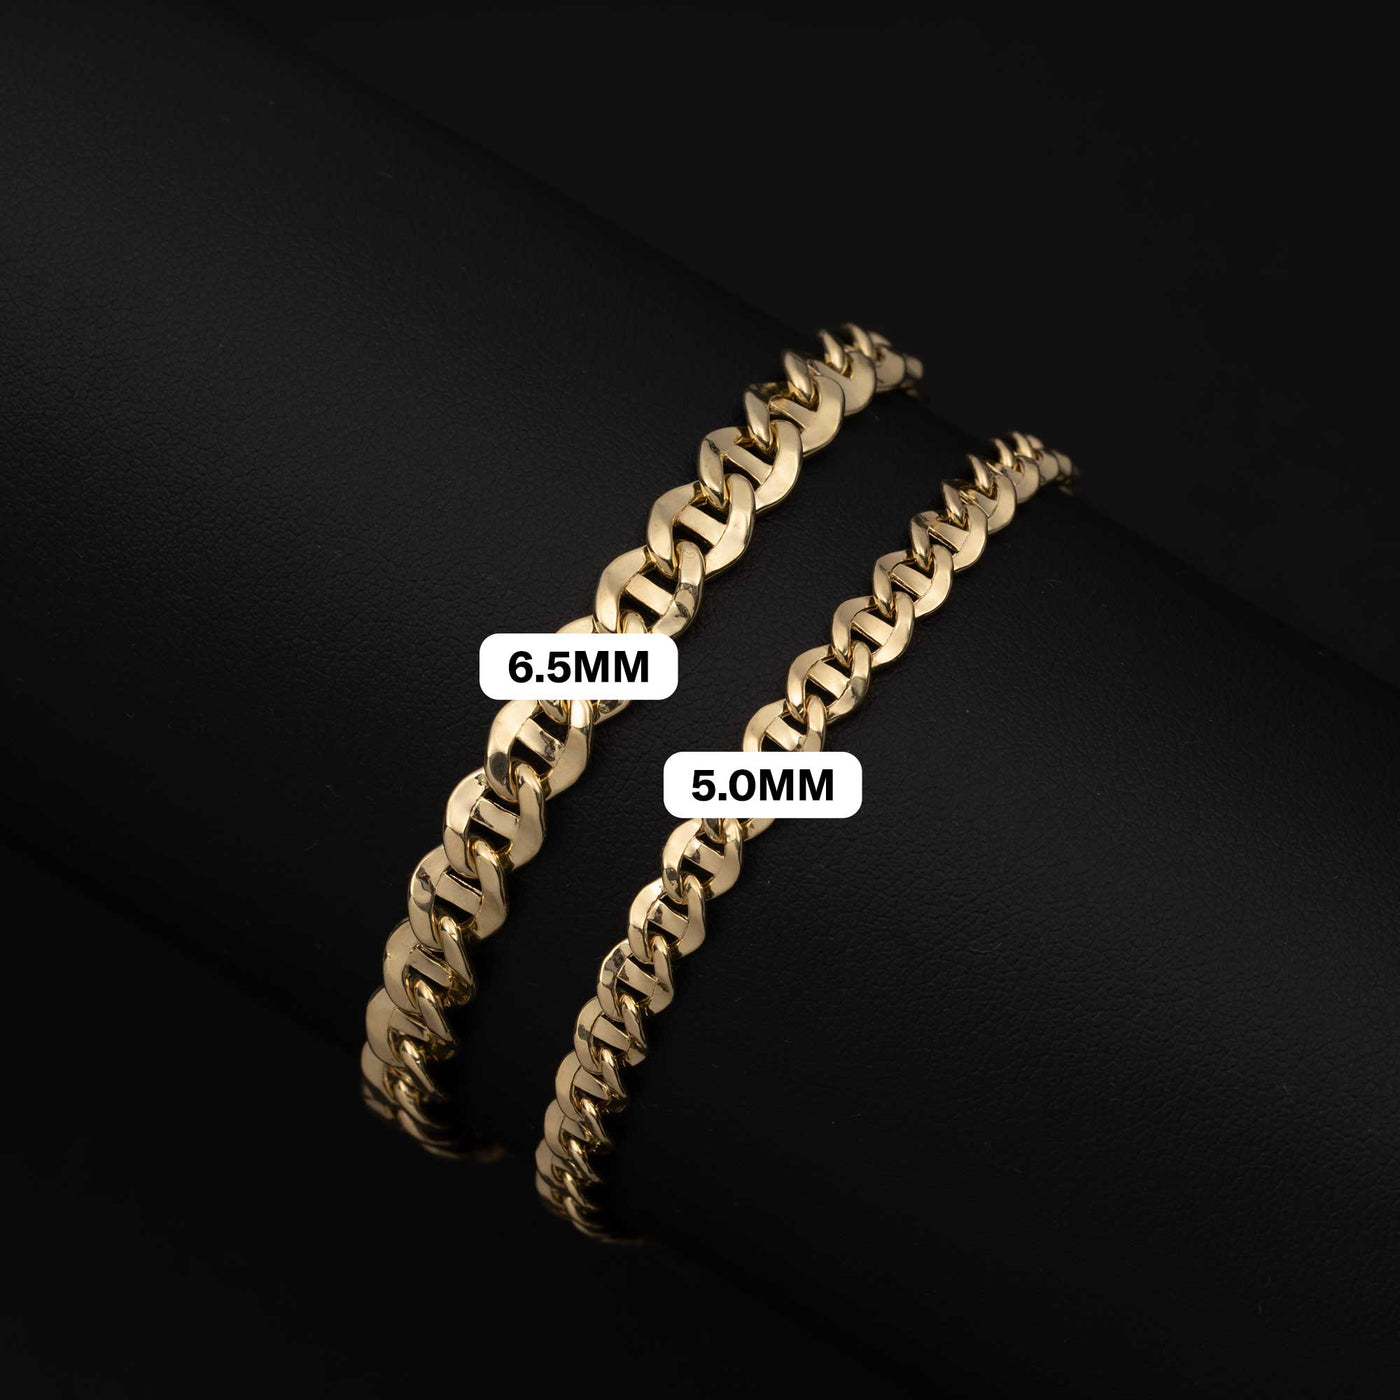 Women's Mariner Link Bracelet 14K Yellow Gold - Hollow